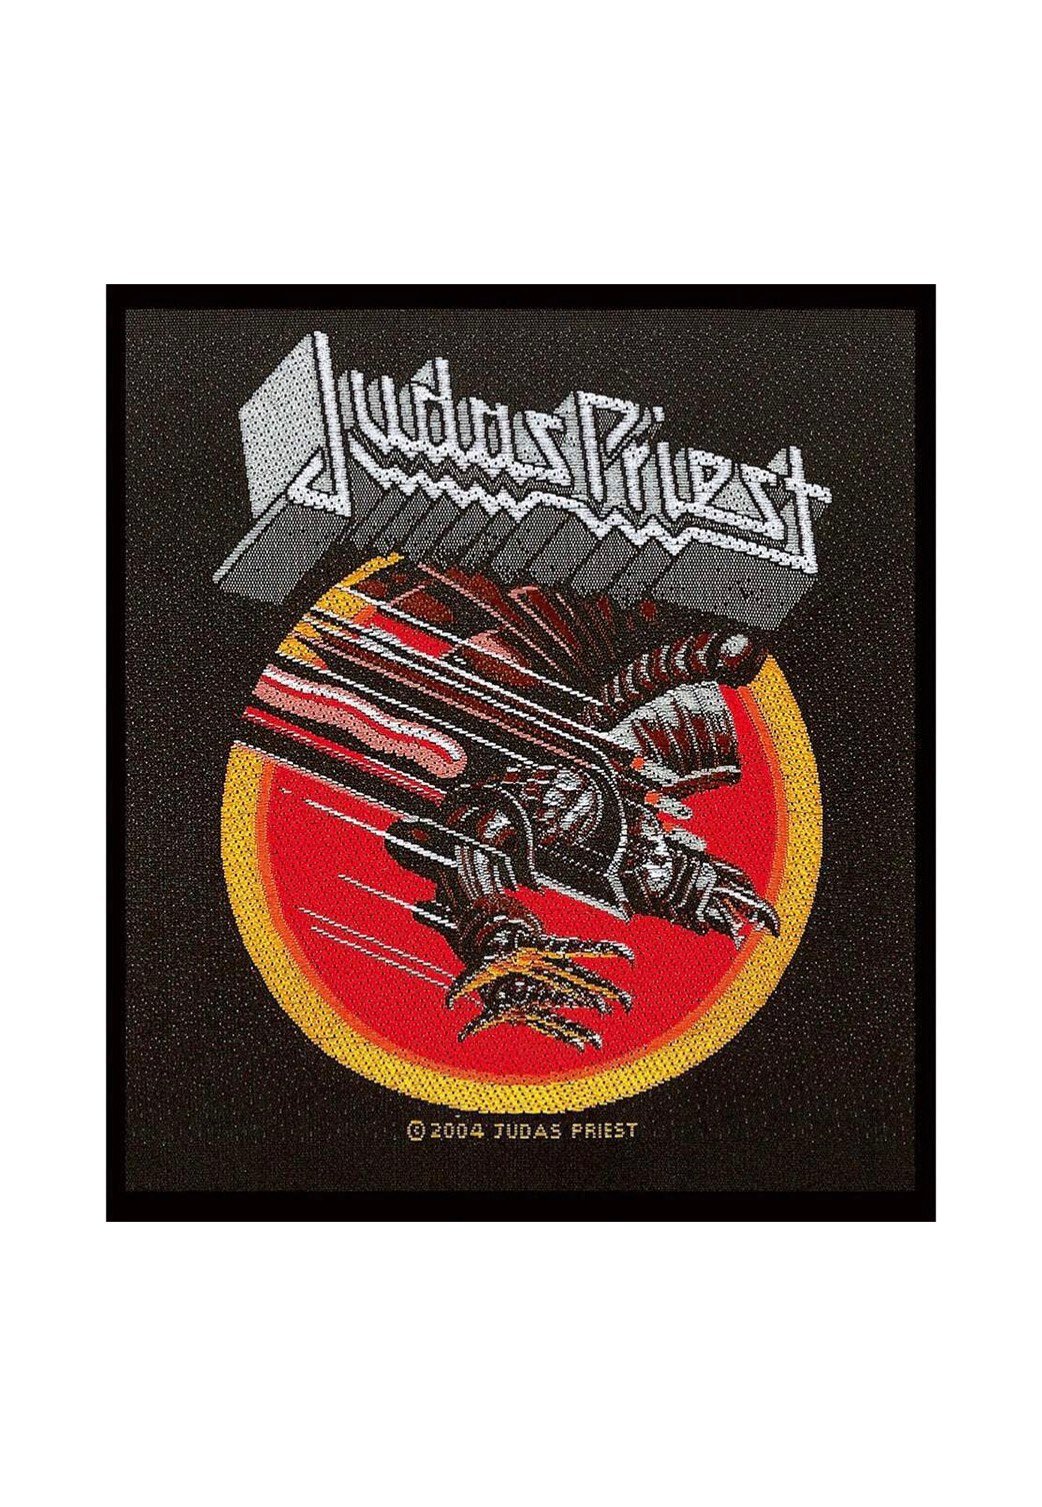 Judas Priest - Screaming For Vengeance - Patch